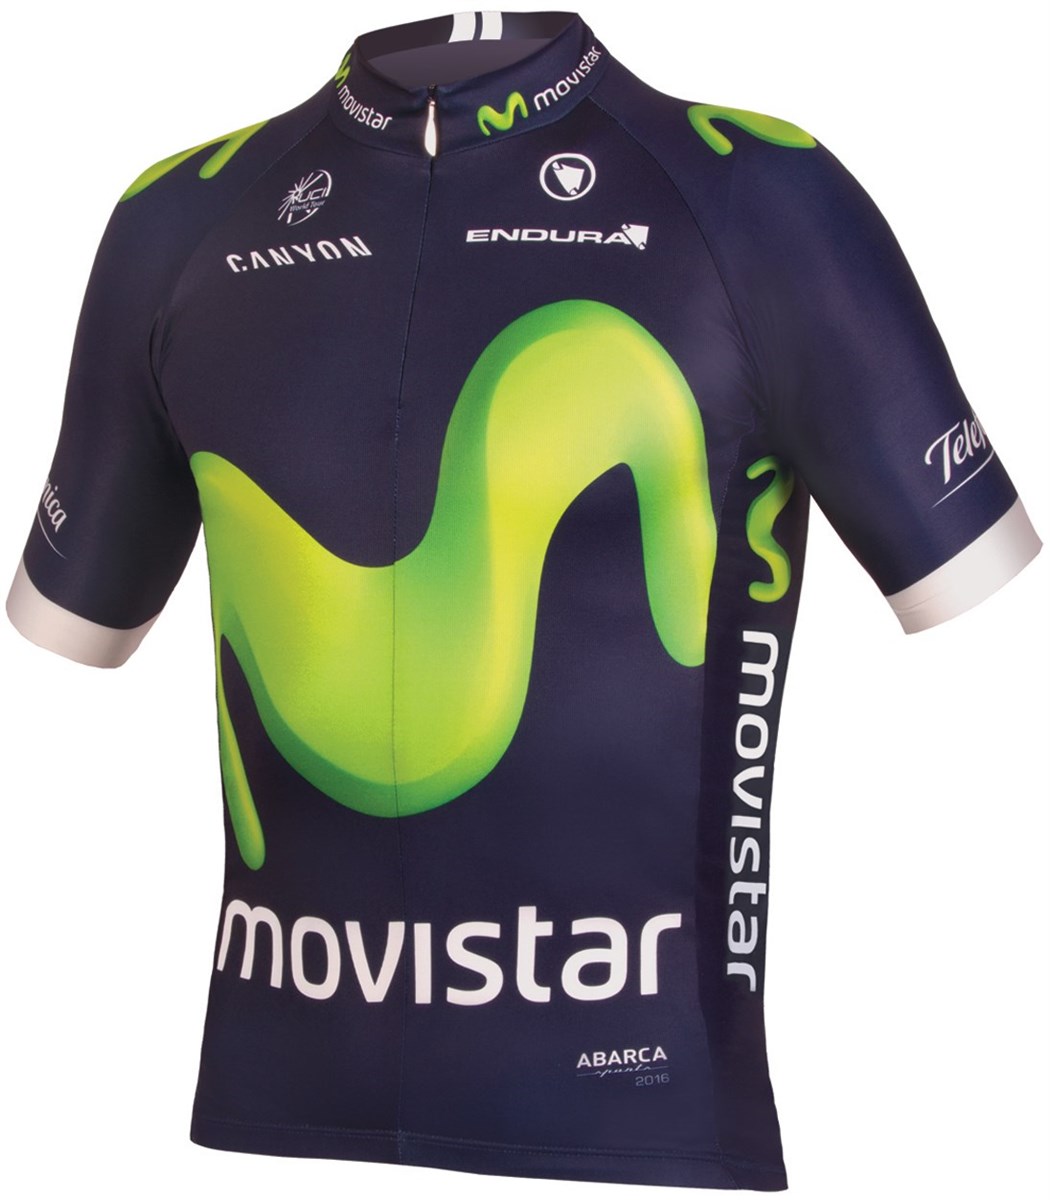 Endura Movistar Team Replica Short Sleeve Cycling Jersey AW16 product image